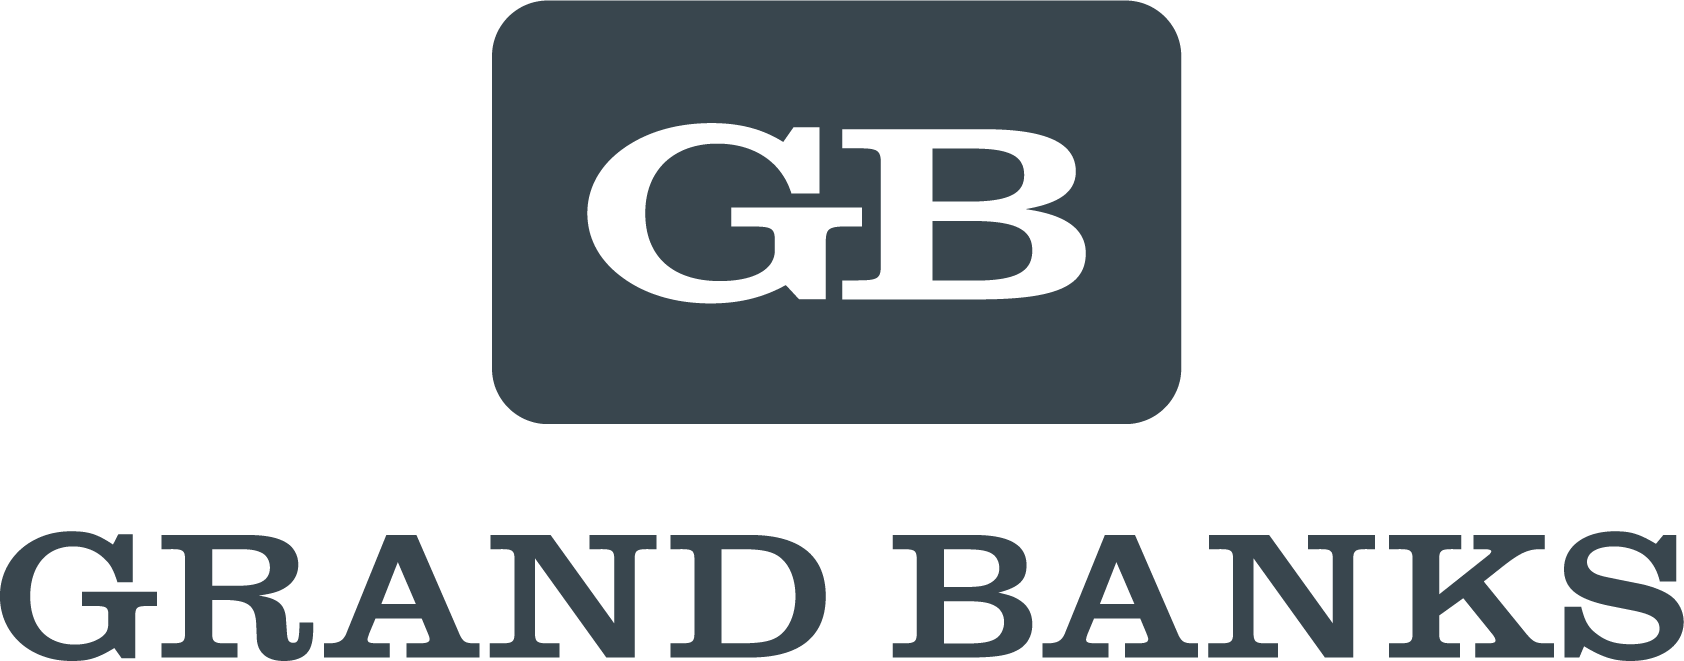 Grand Banks brand logo